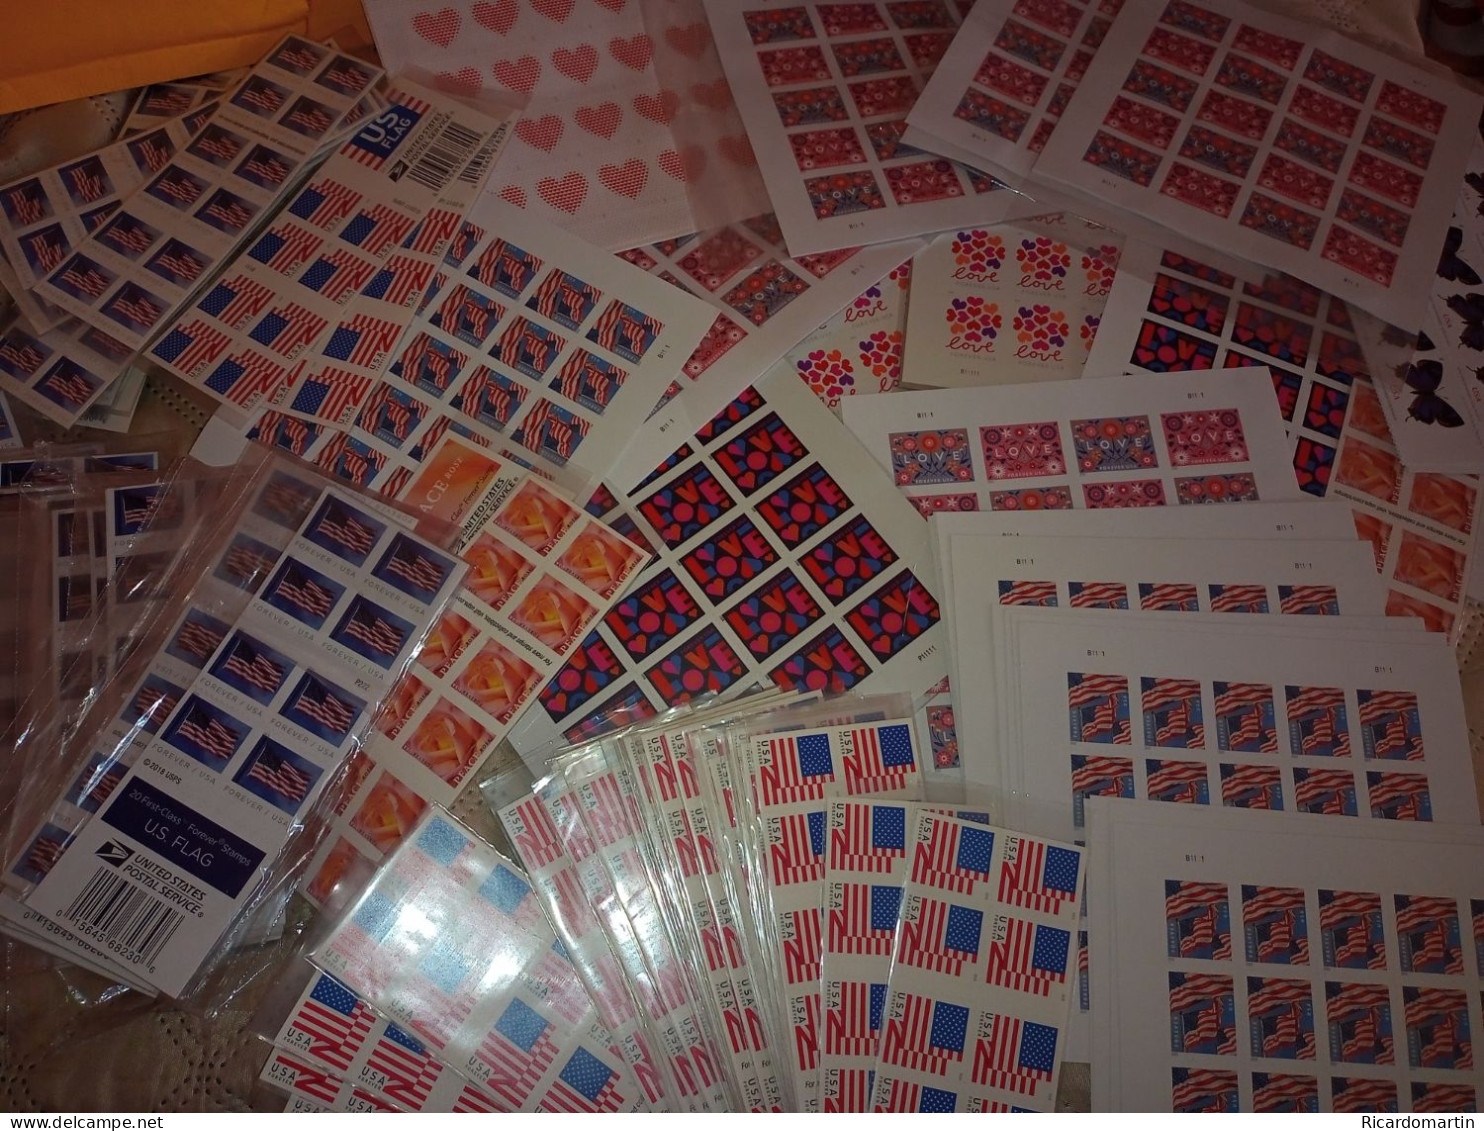 UNITED STATES 100 FOREVER STAMPS, FV $63.00 - Unused Stamps